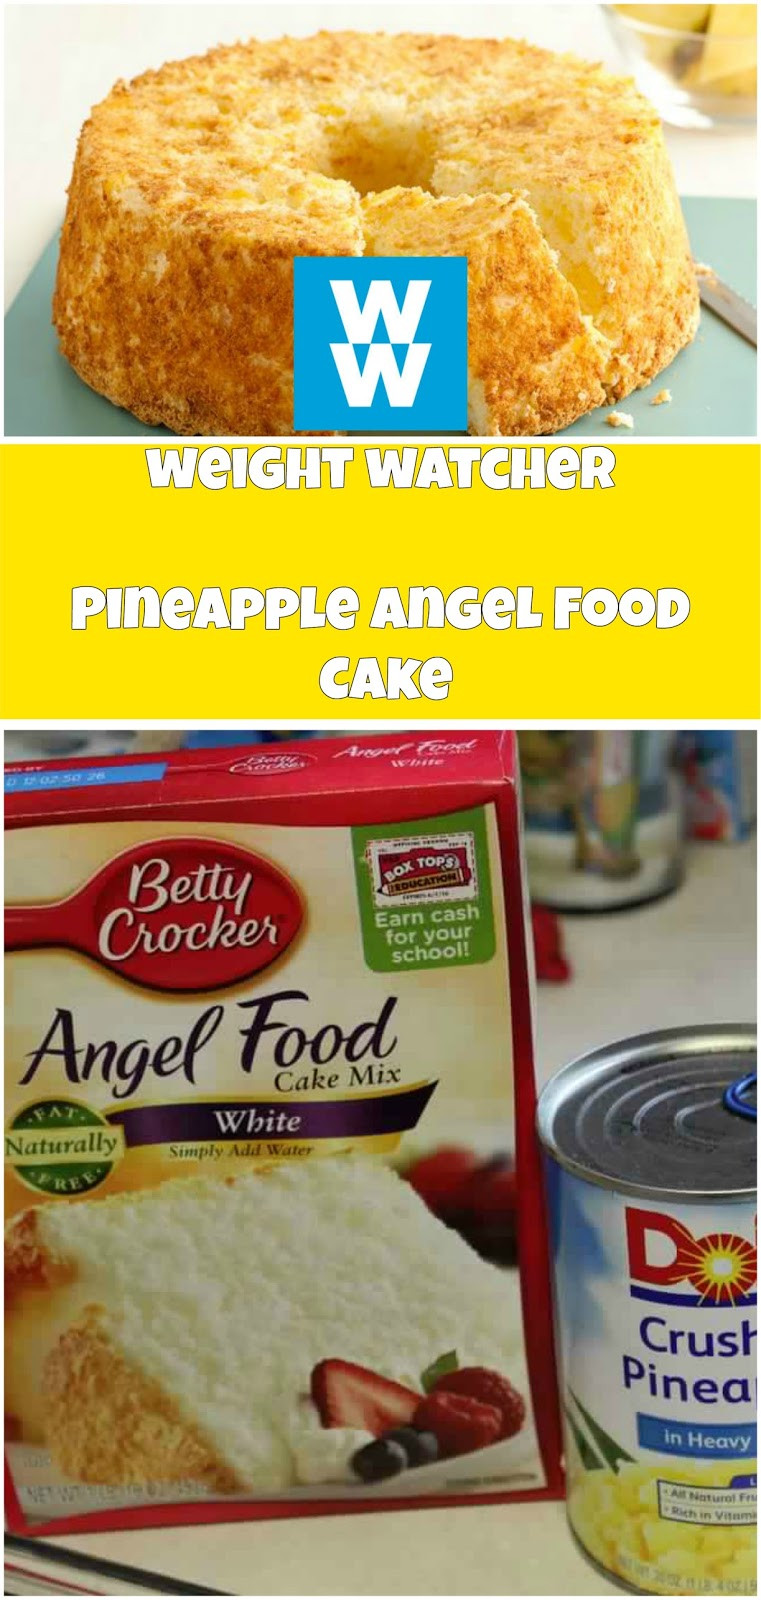 Weight Watcher Angel Food Cake Recipe
 weight watchers recipes Pineapple Angel Food Cake 5